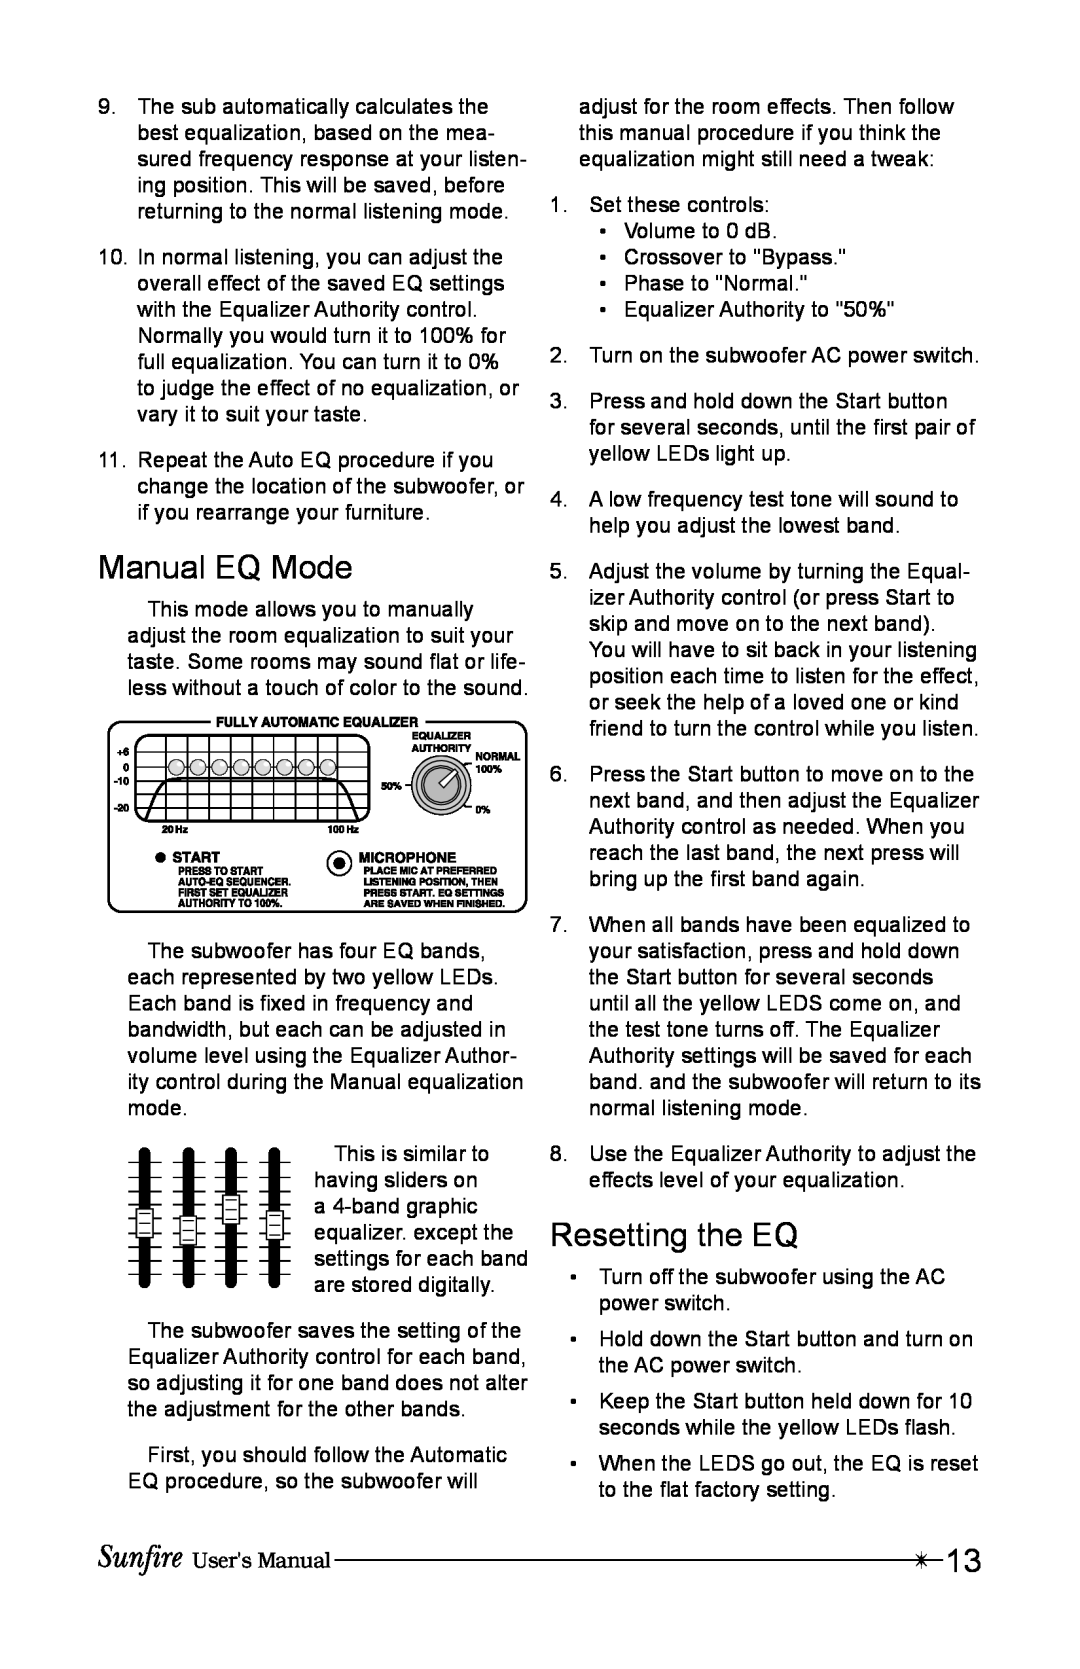 Sunfire True Subwoofer Signature and Standard Version user manual Manual EQ Mode, Resetting the EQ 